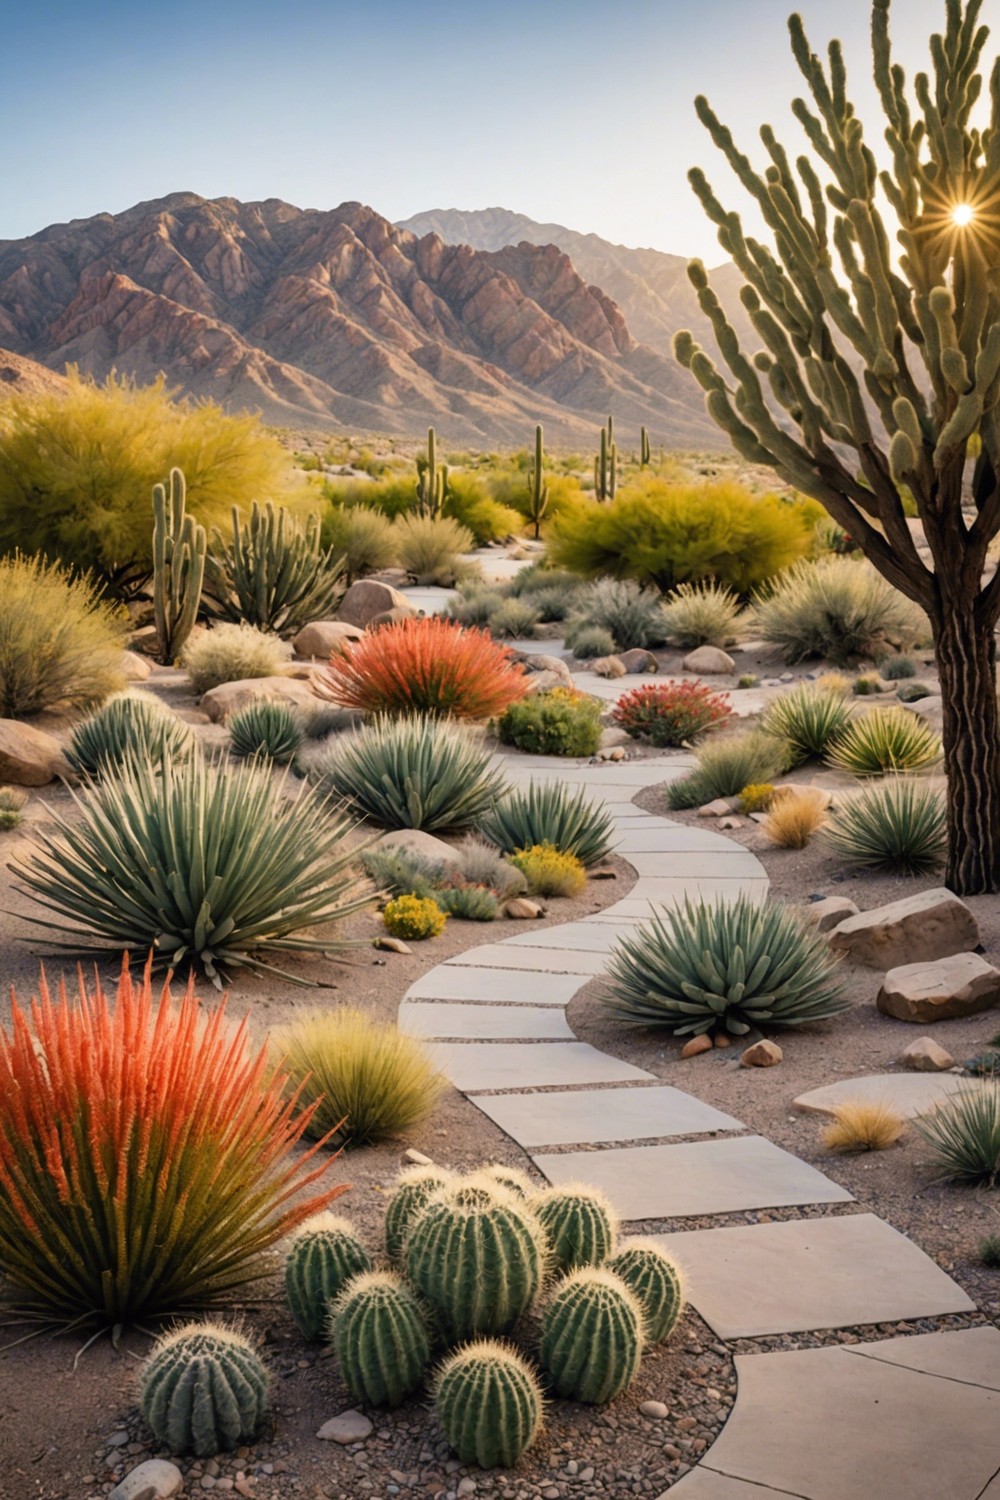 Incorporate Desert Native Plants for a True Desert Look